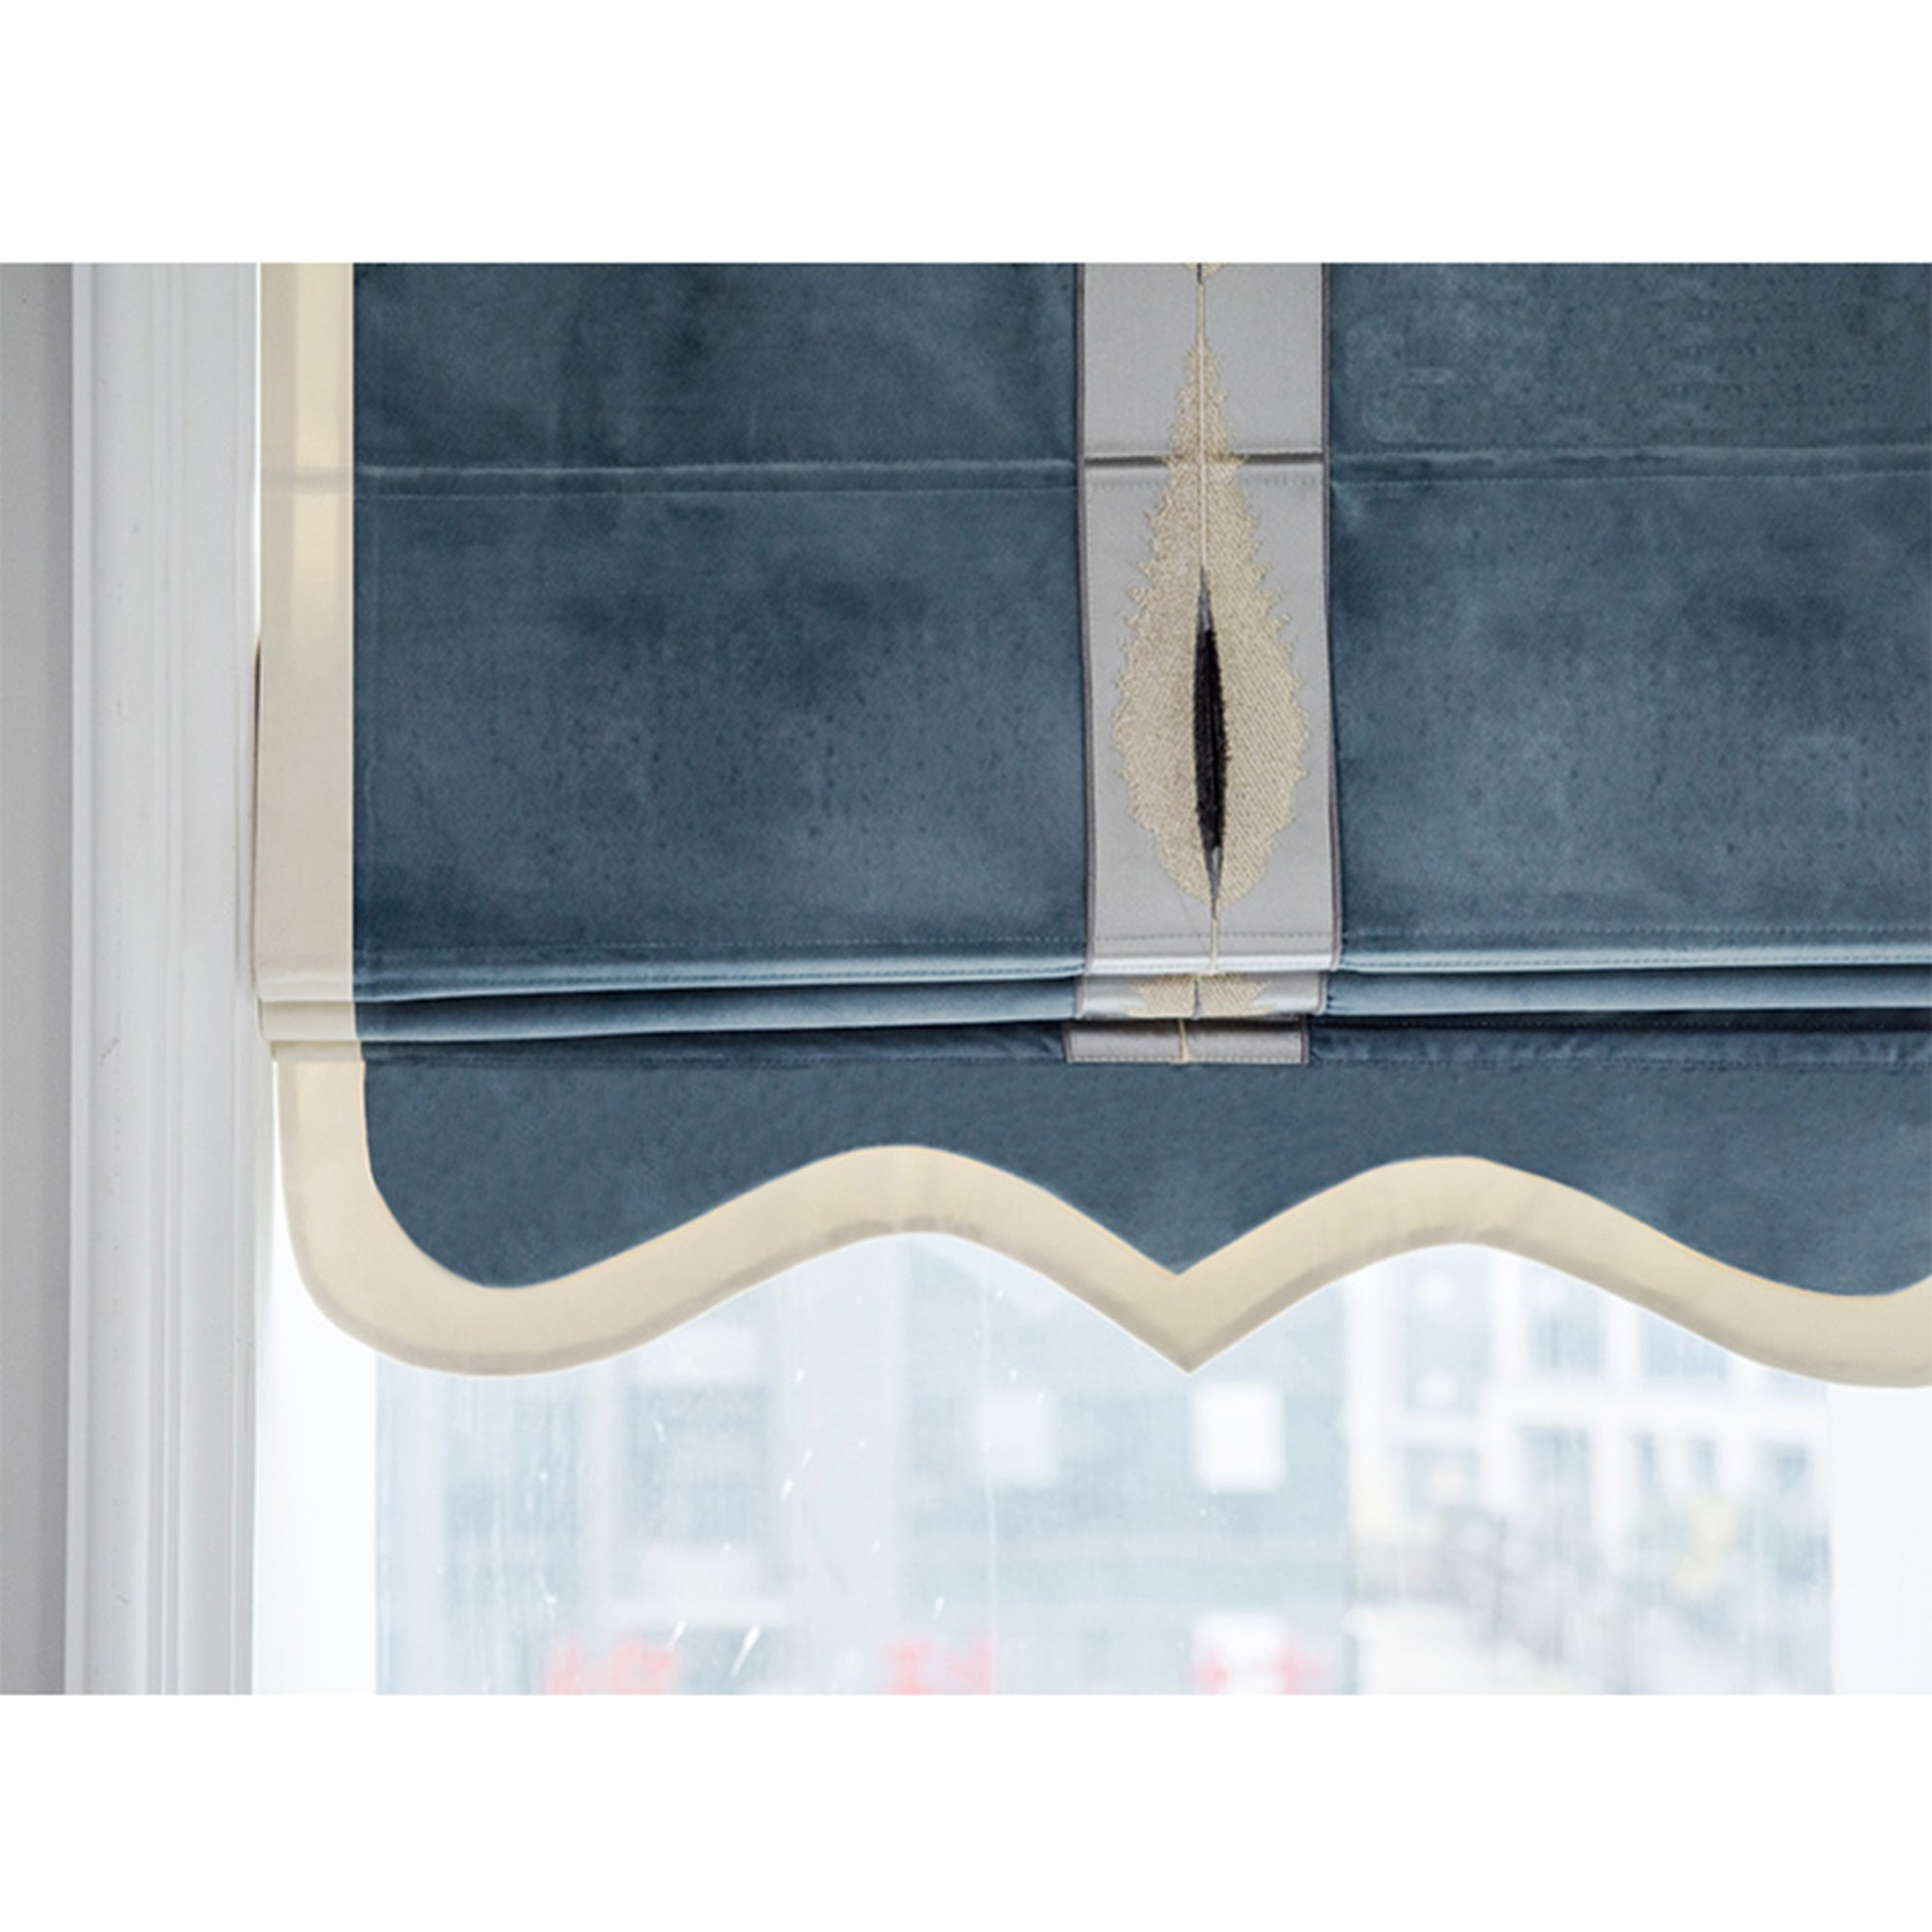 Quick Fix Washable Roman Window Shades Flat Fold with Valance - Blue-Gray SG-104